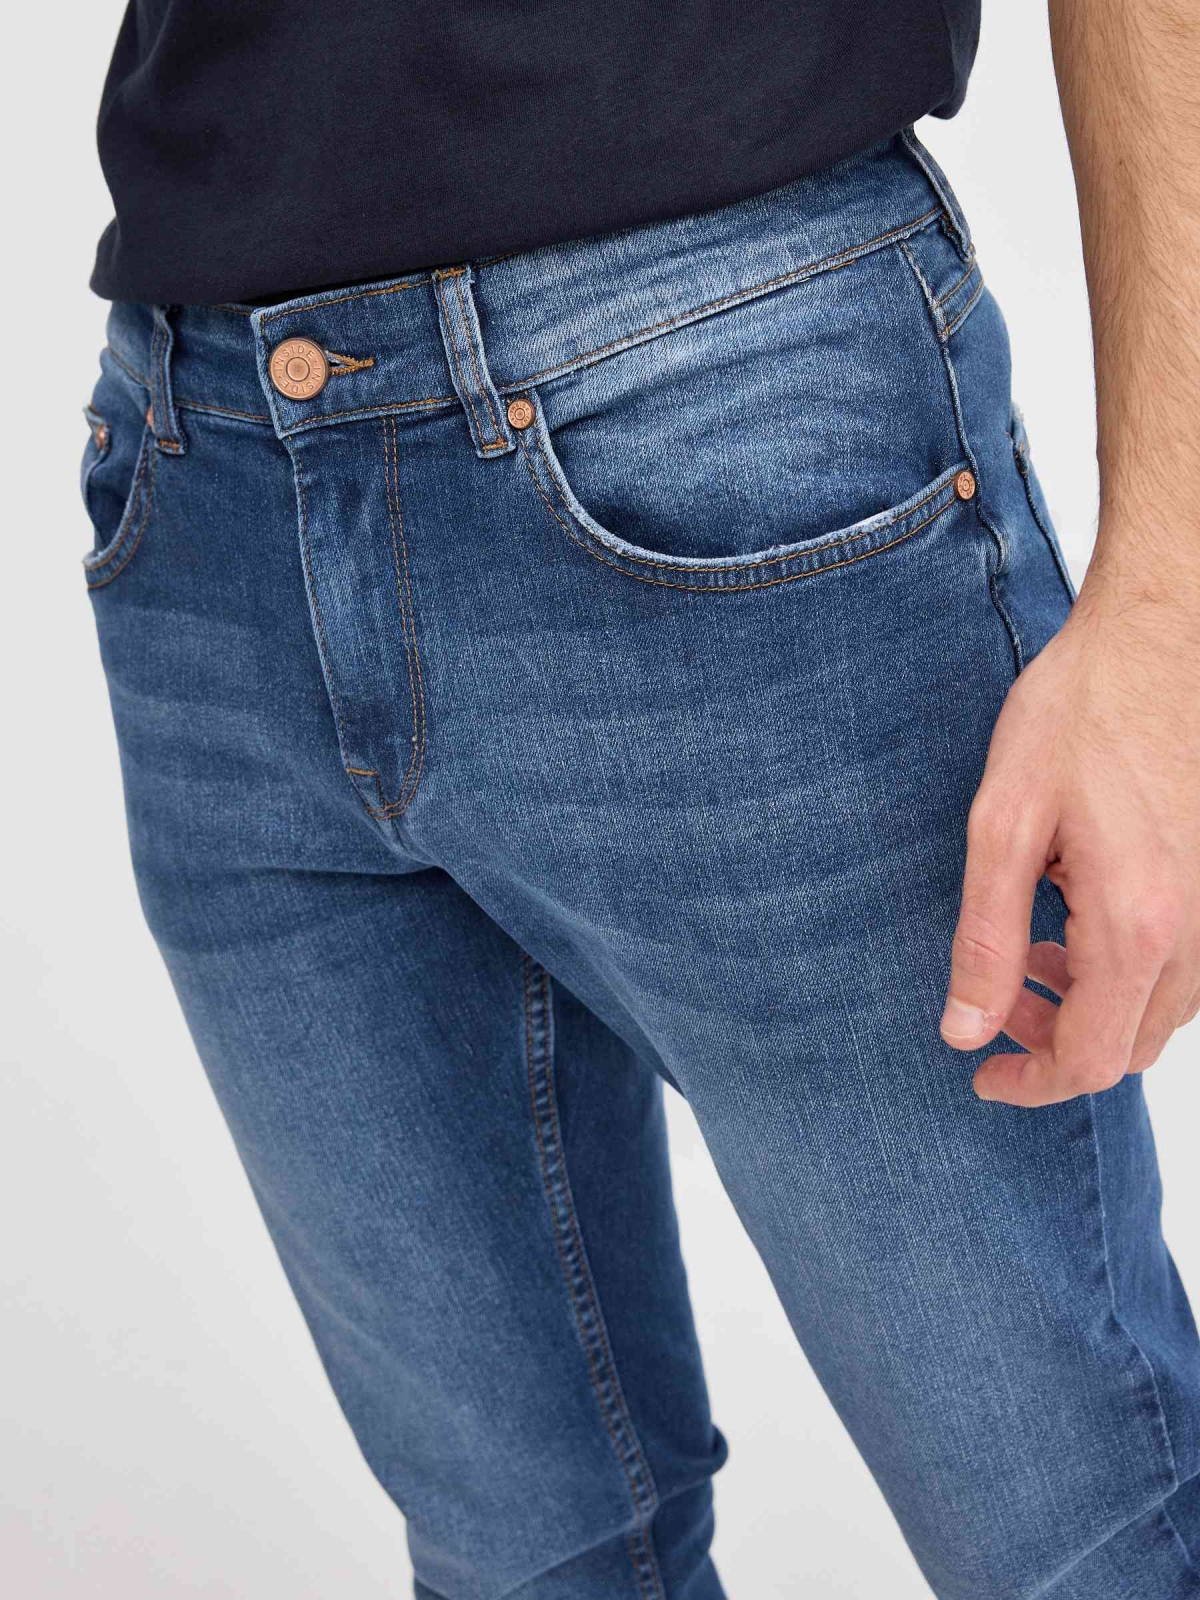 Indigo thigh washed slim jeans blue detail view